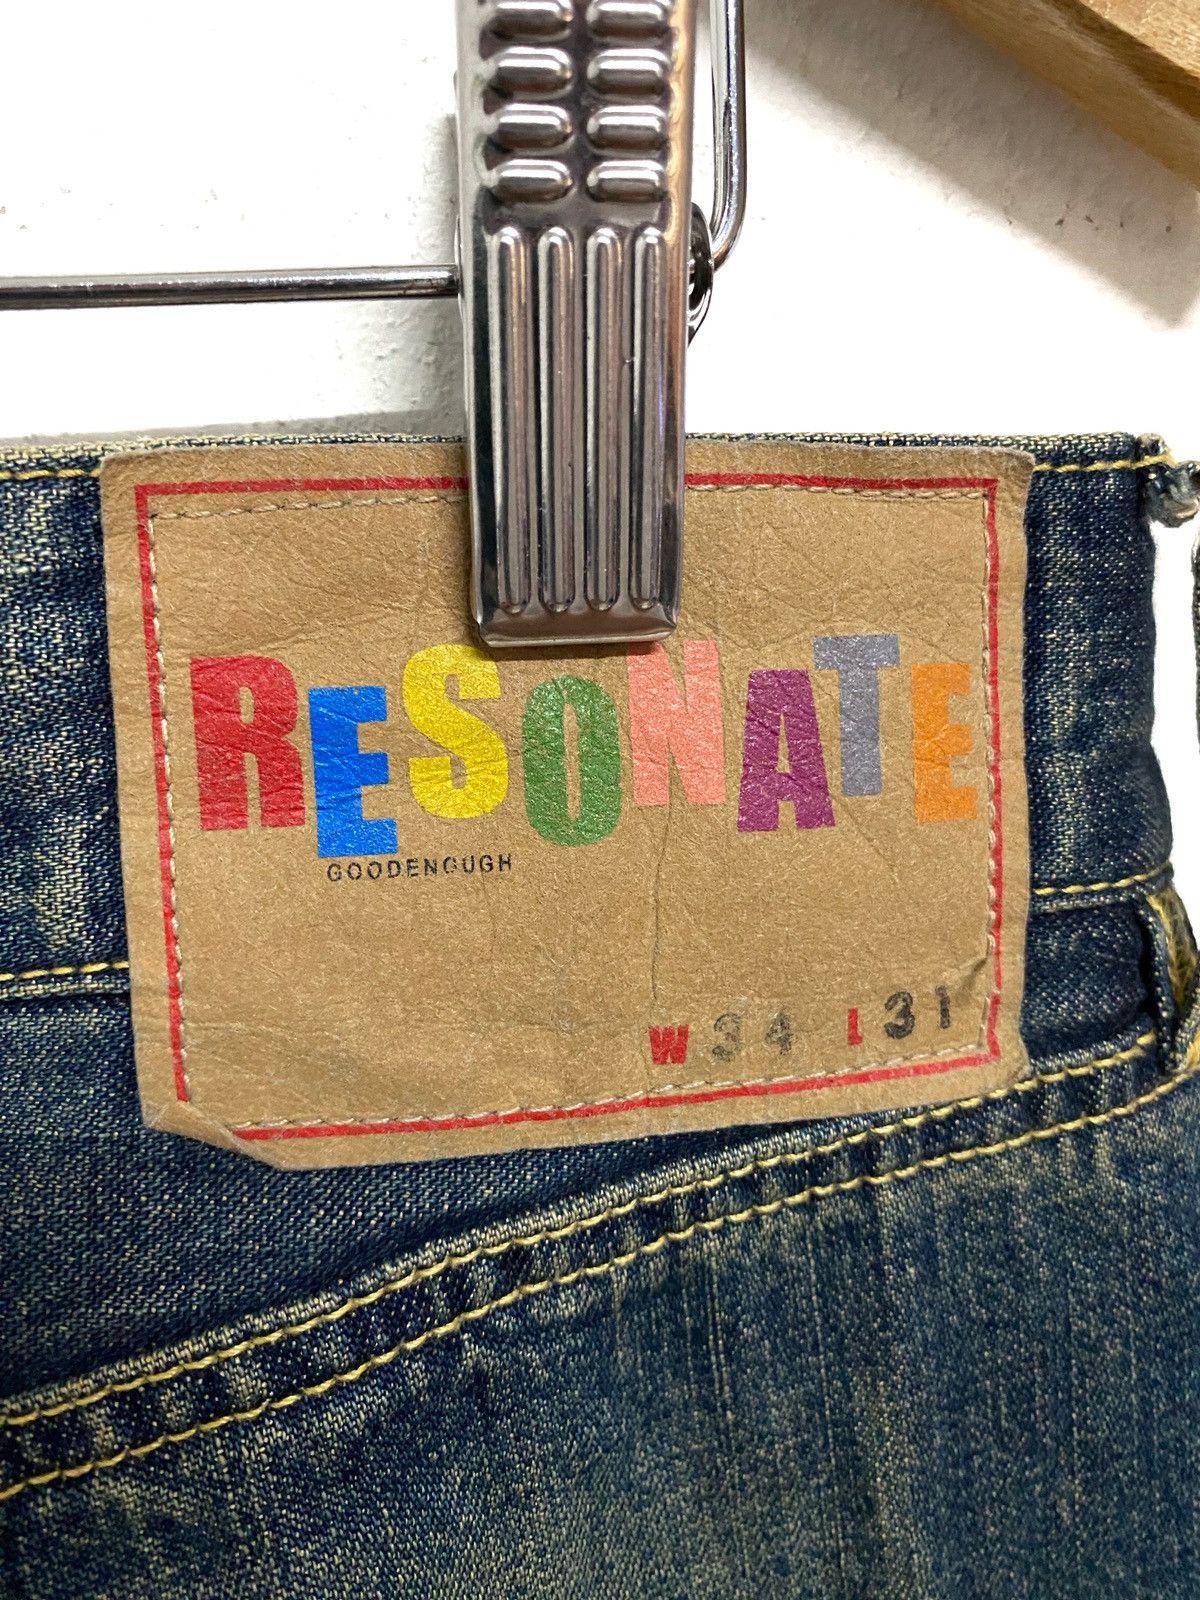 Goodenough - Good Enough Resonate Selvedge Denim Jeans - 10